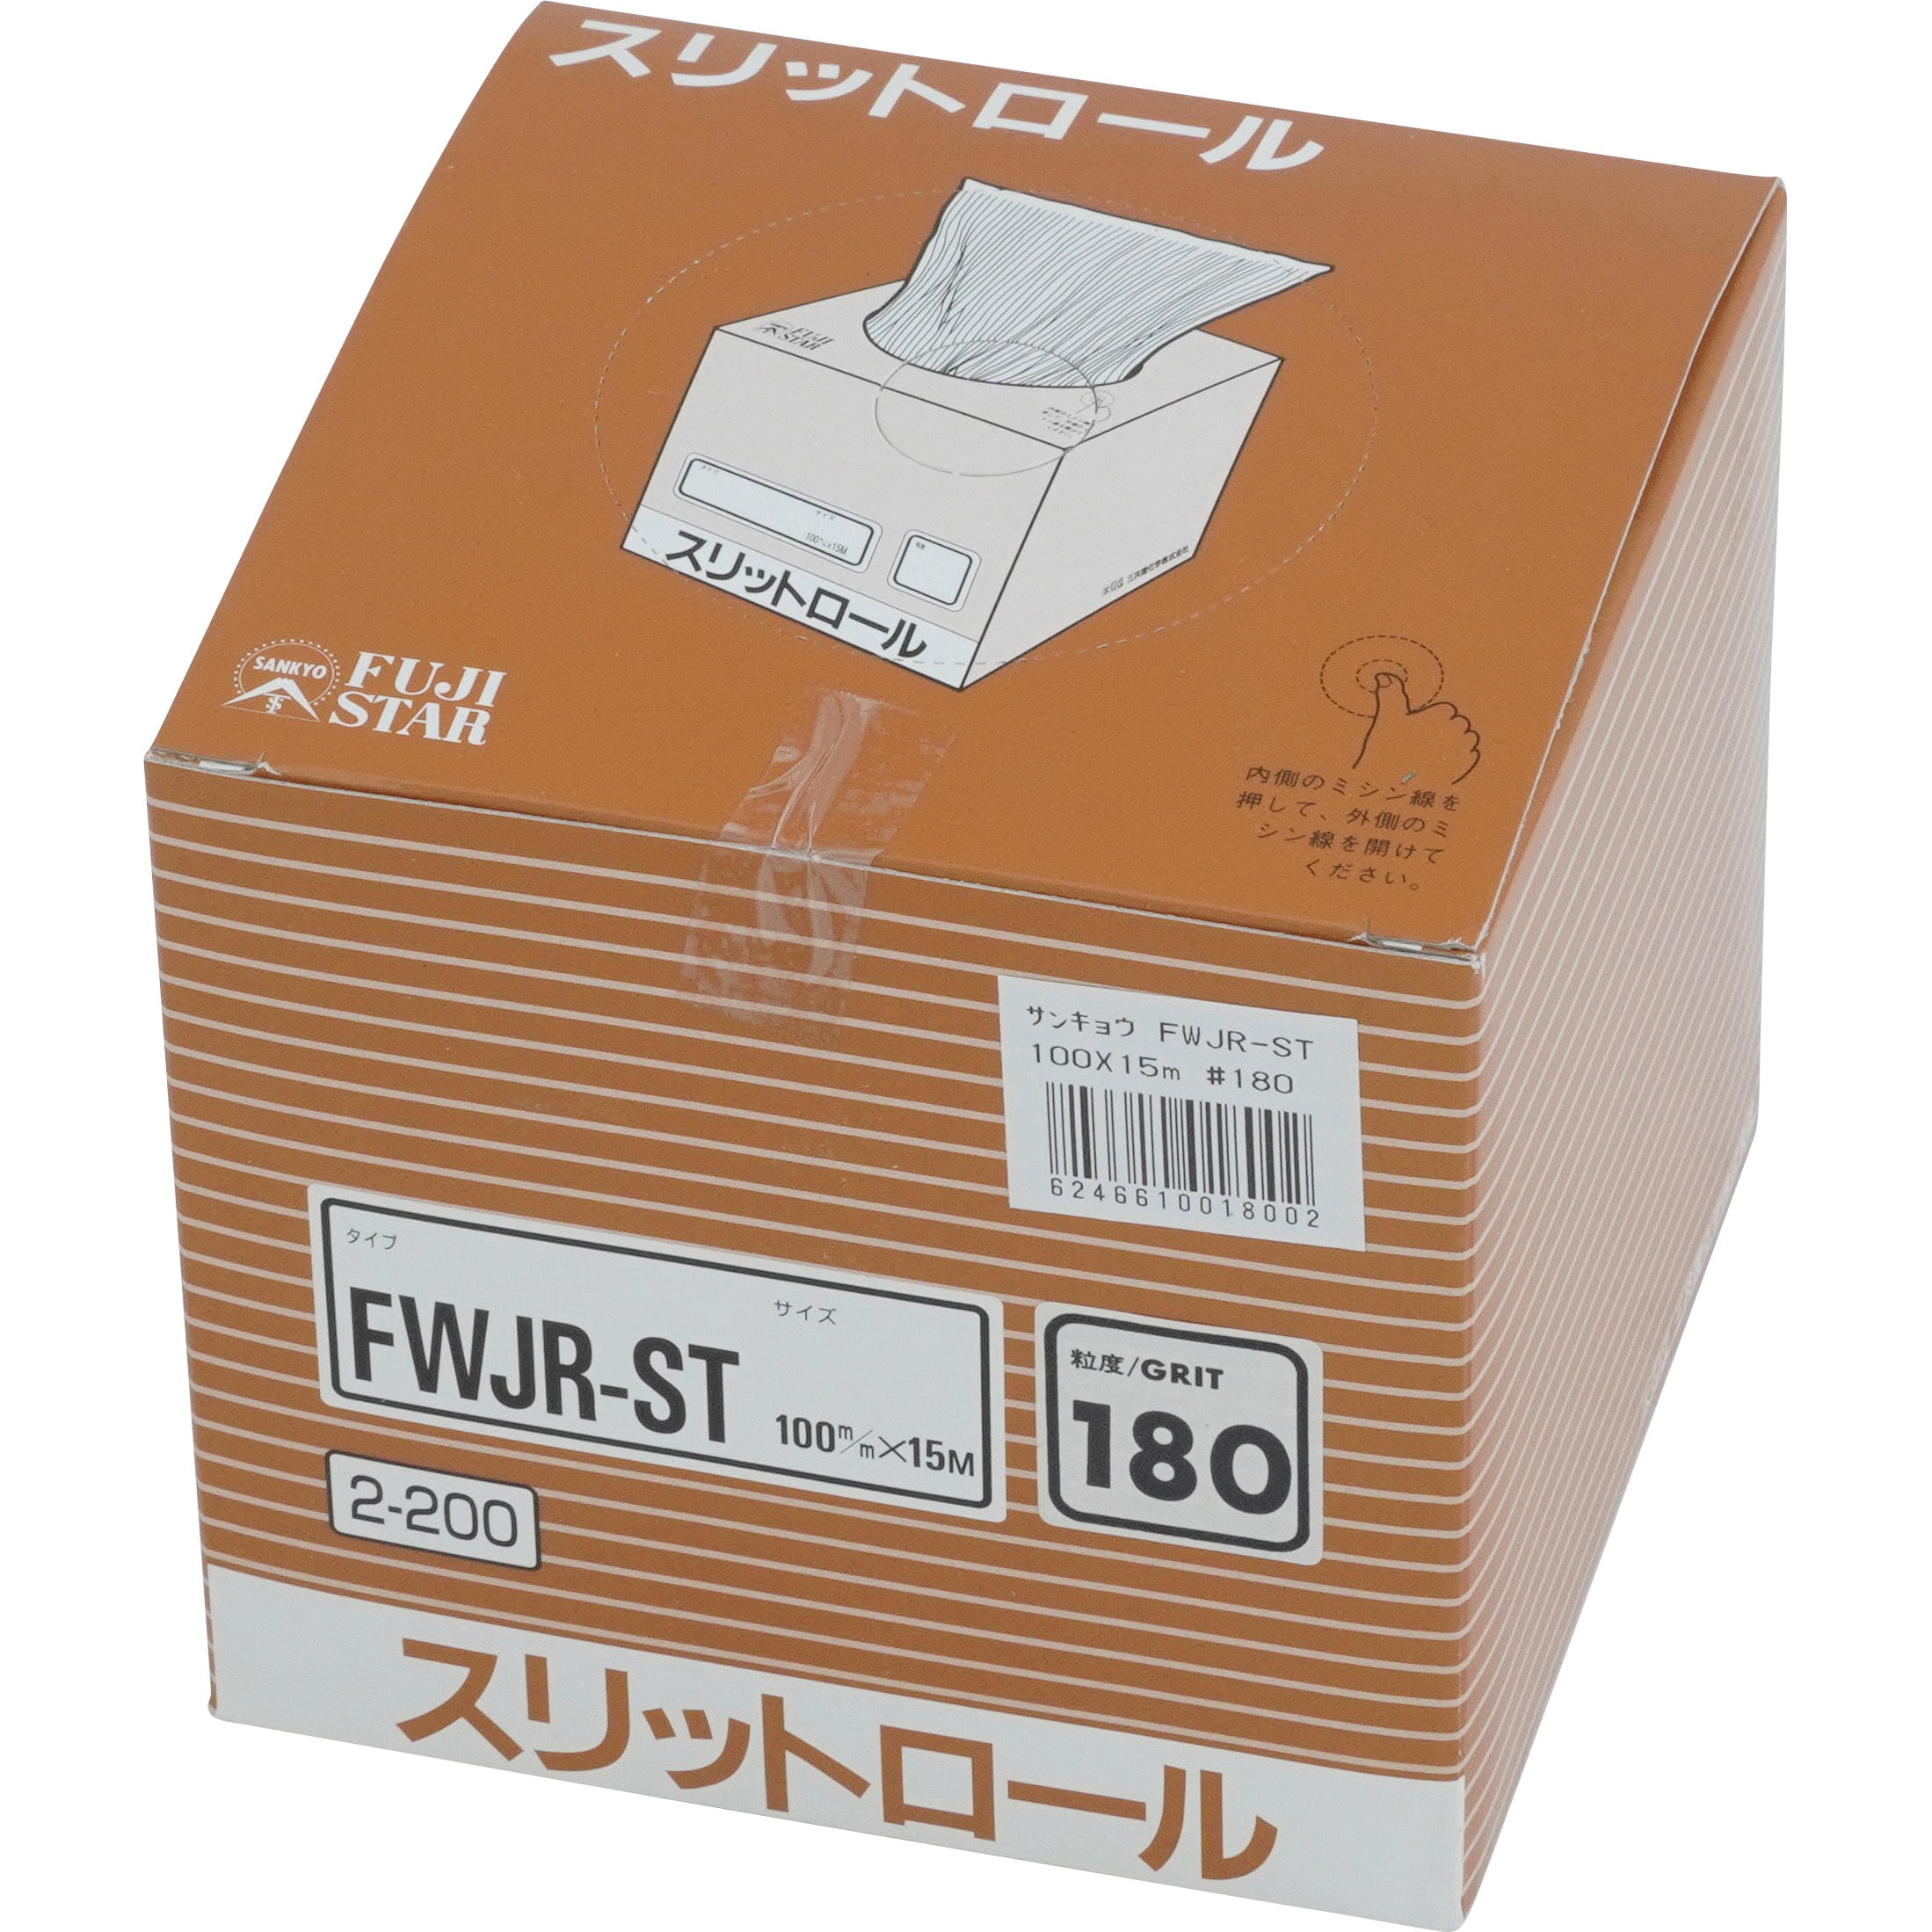 FWJR-ST100mm*15m#180 スリットロール FWJR-ST 1箱 FUJI STAR(三共 